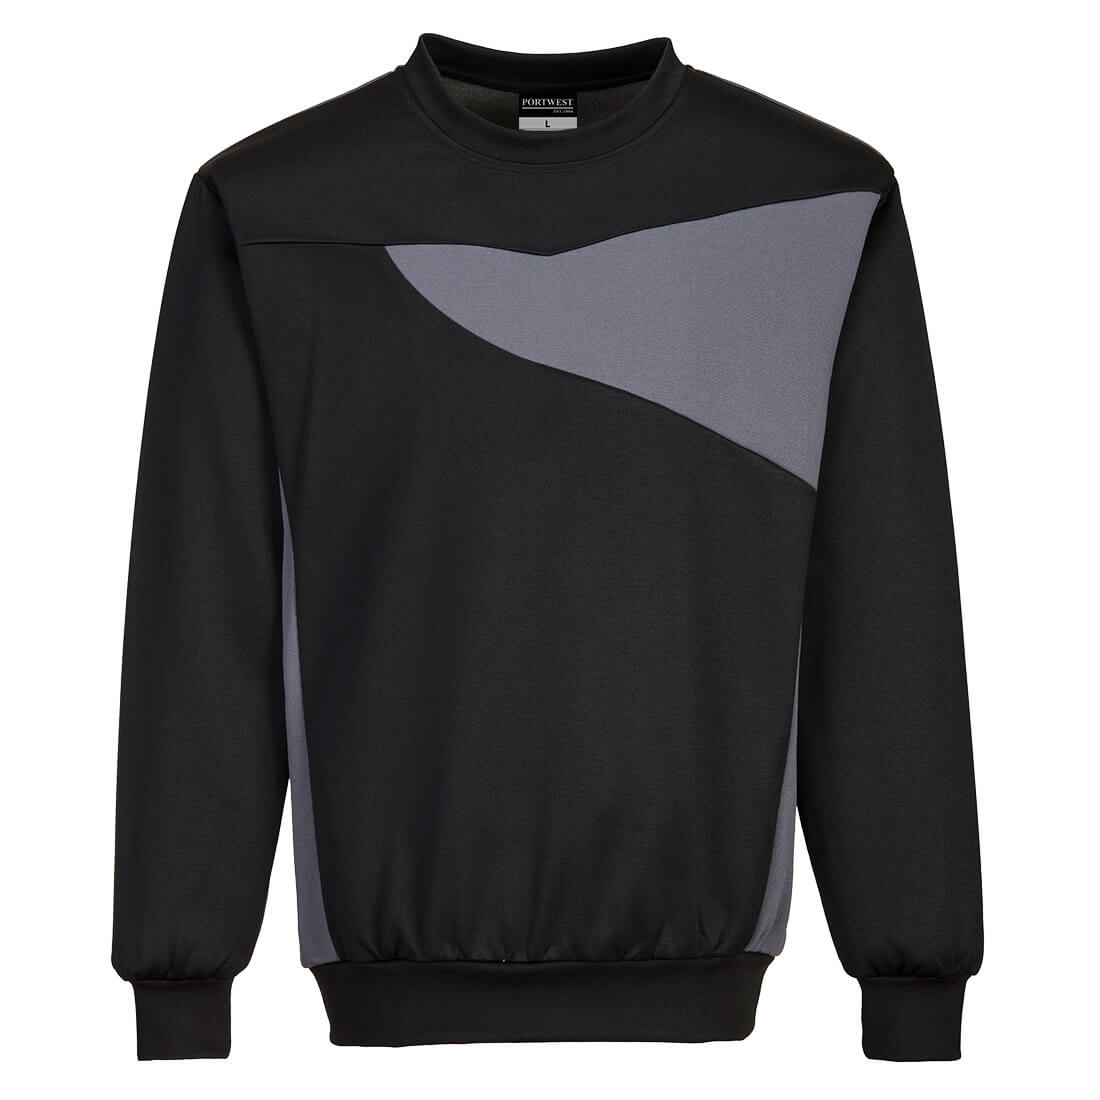 PW2 Sweatshirt - Black/Zoom Grey